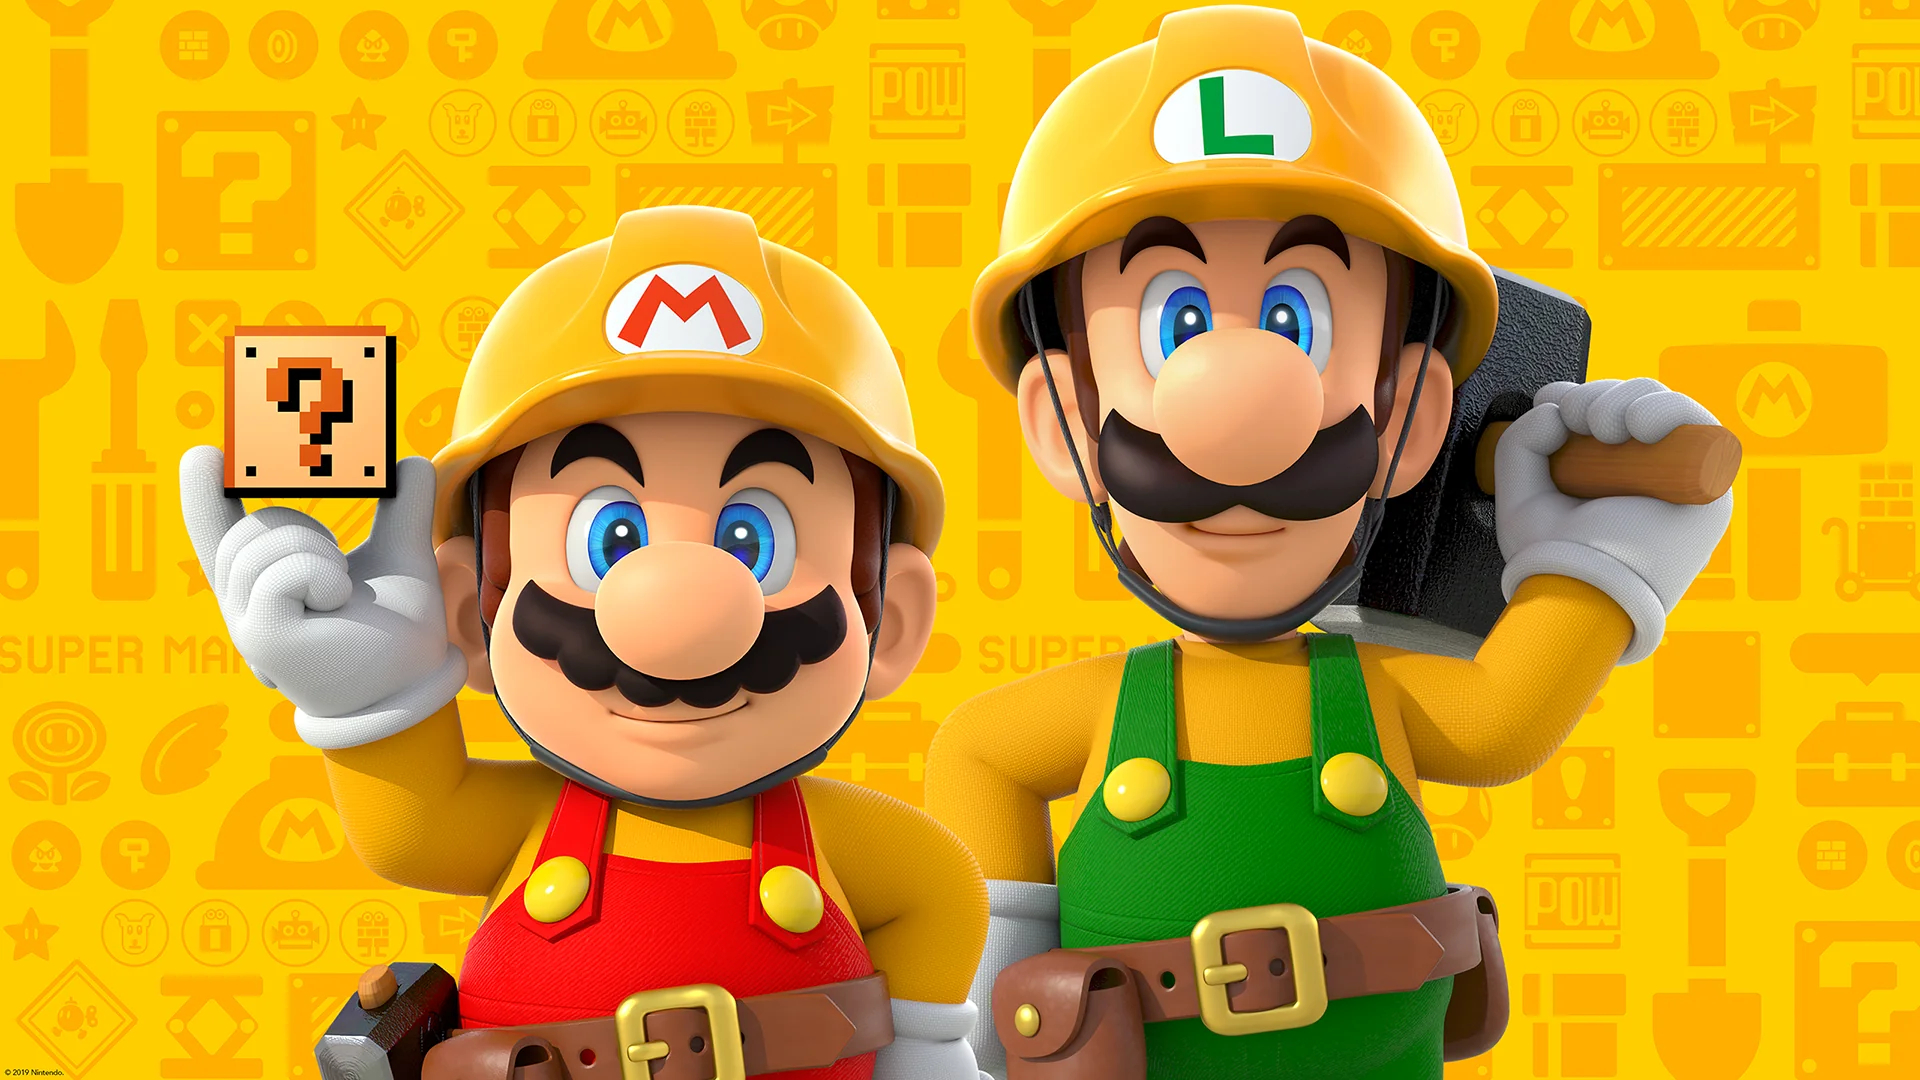 Video Game Super Mario Maker 2 HD Wallpaper | Background Image